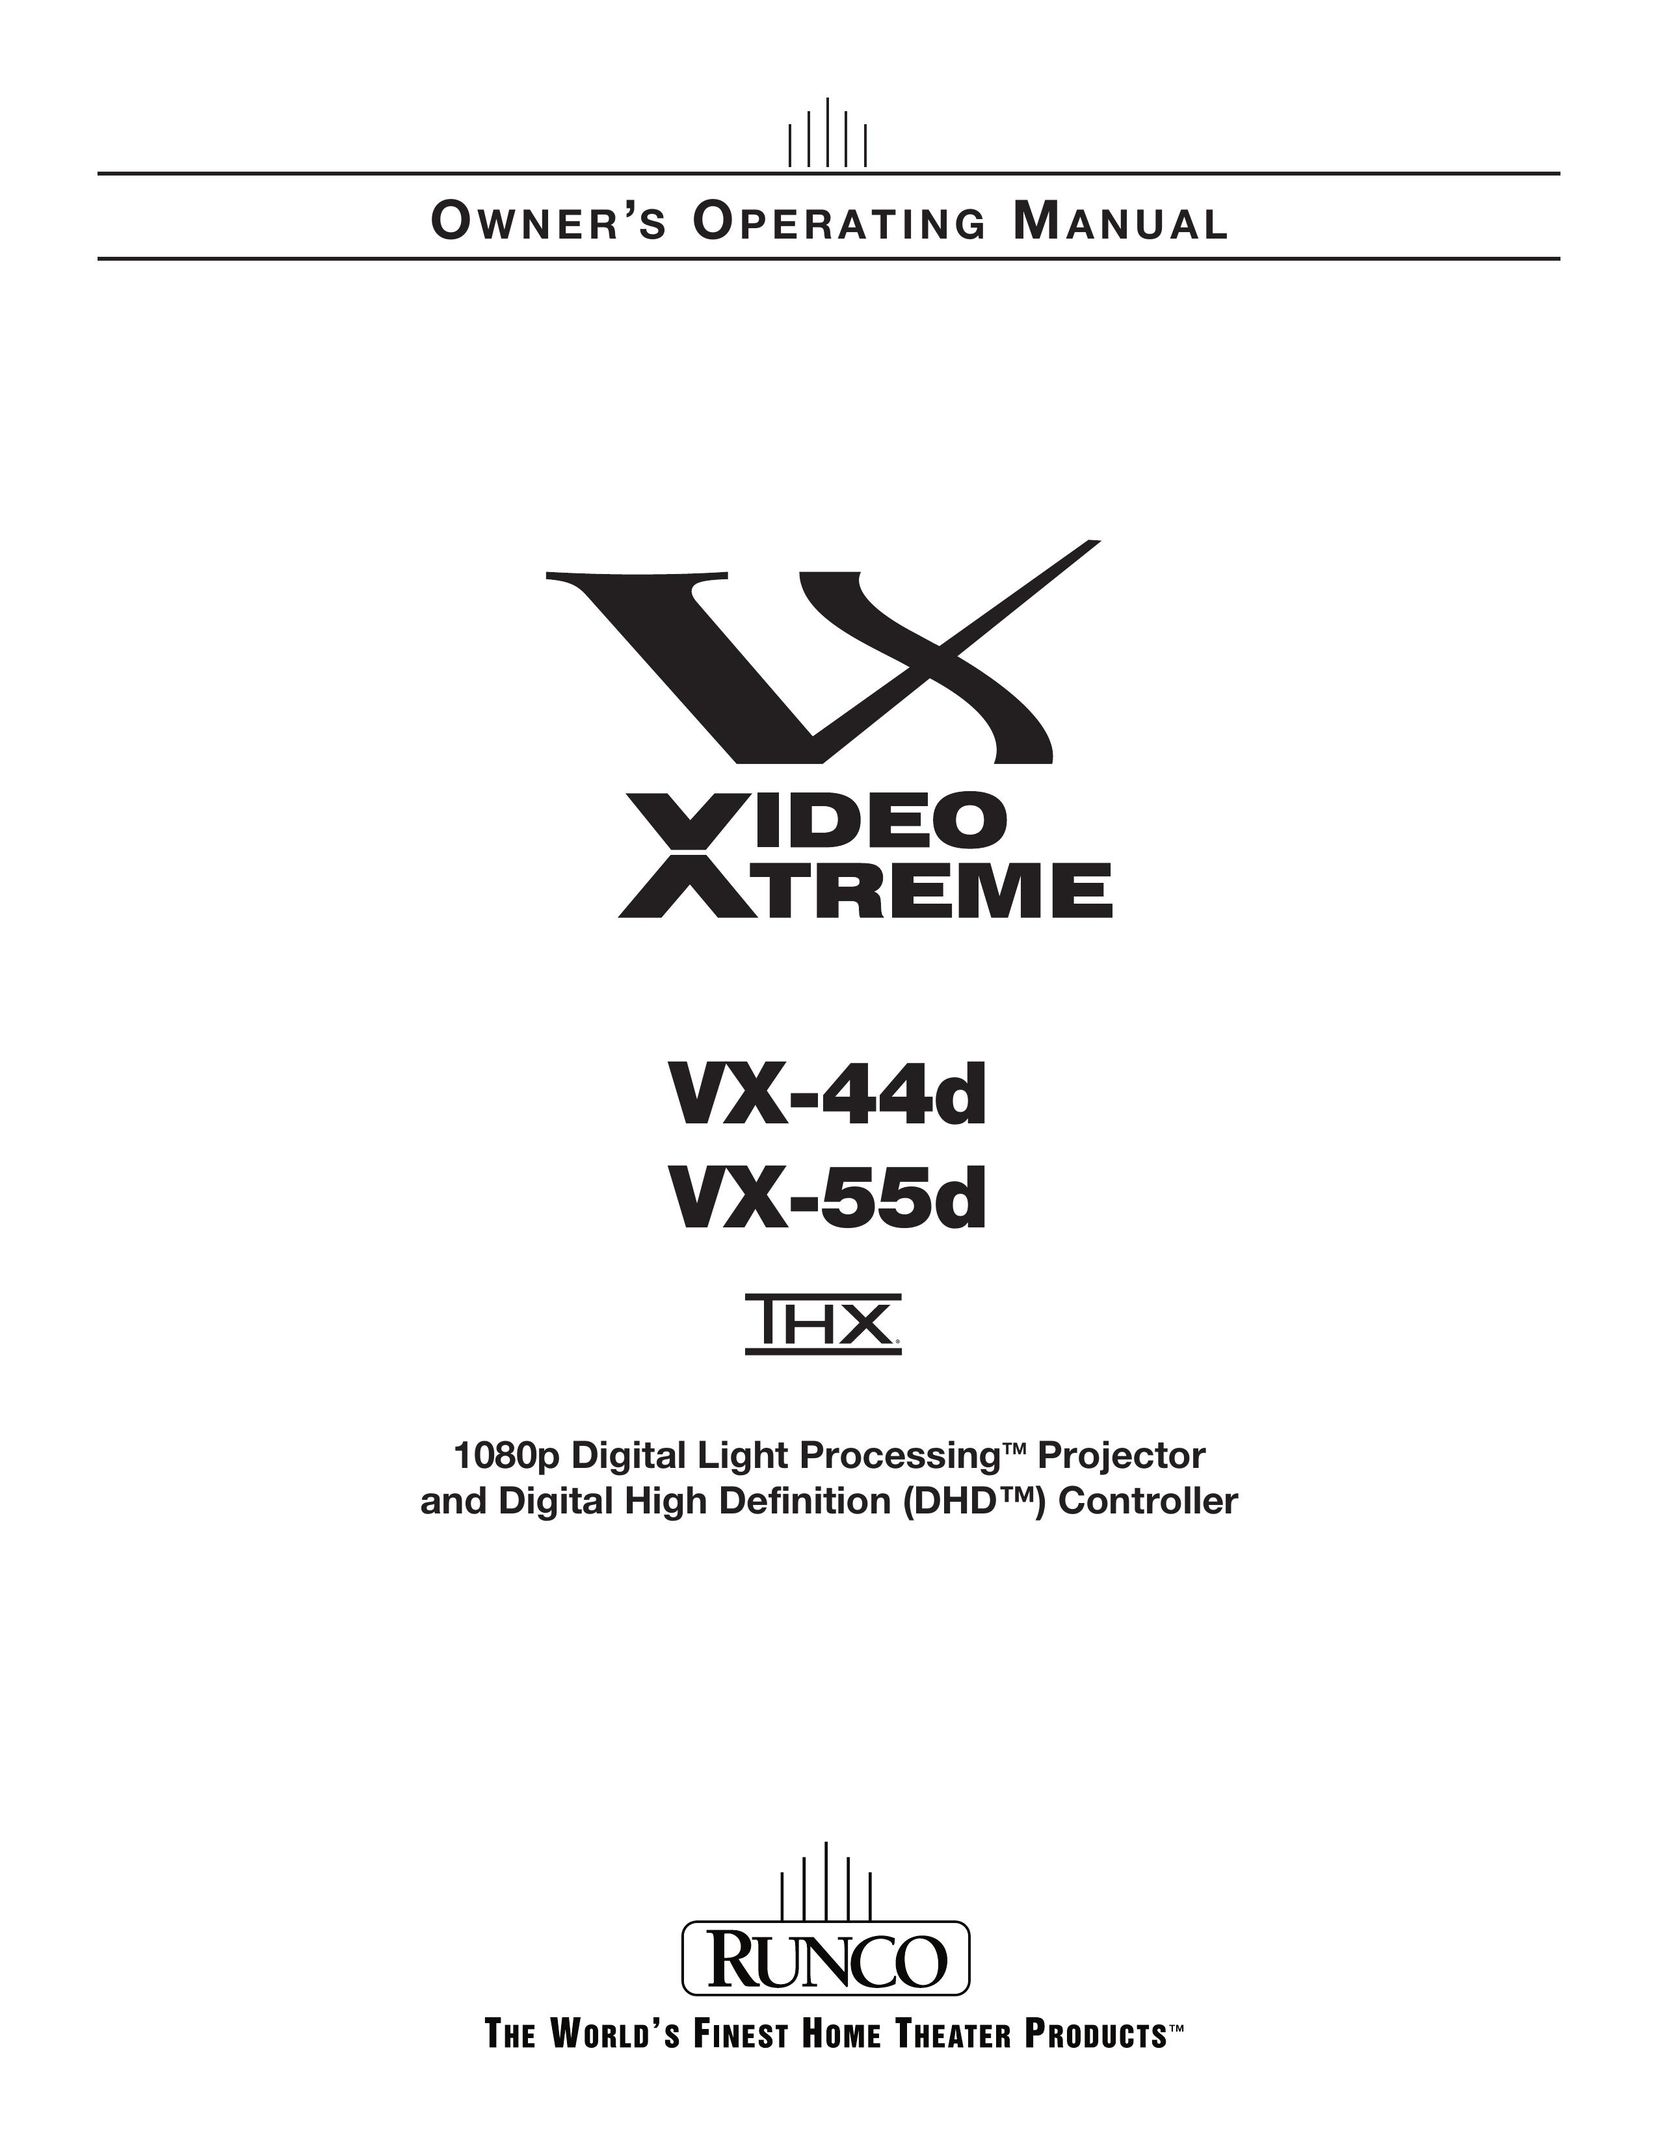 Runco VX-55d Home Theater System User Manual